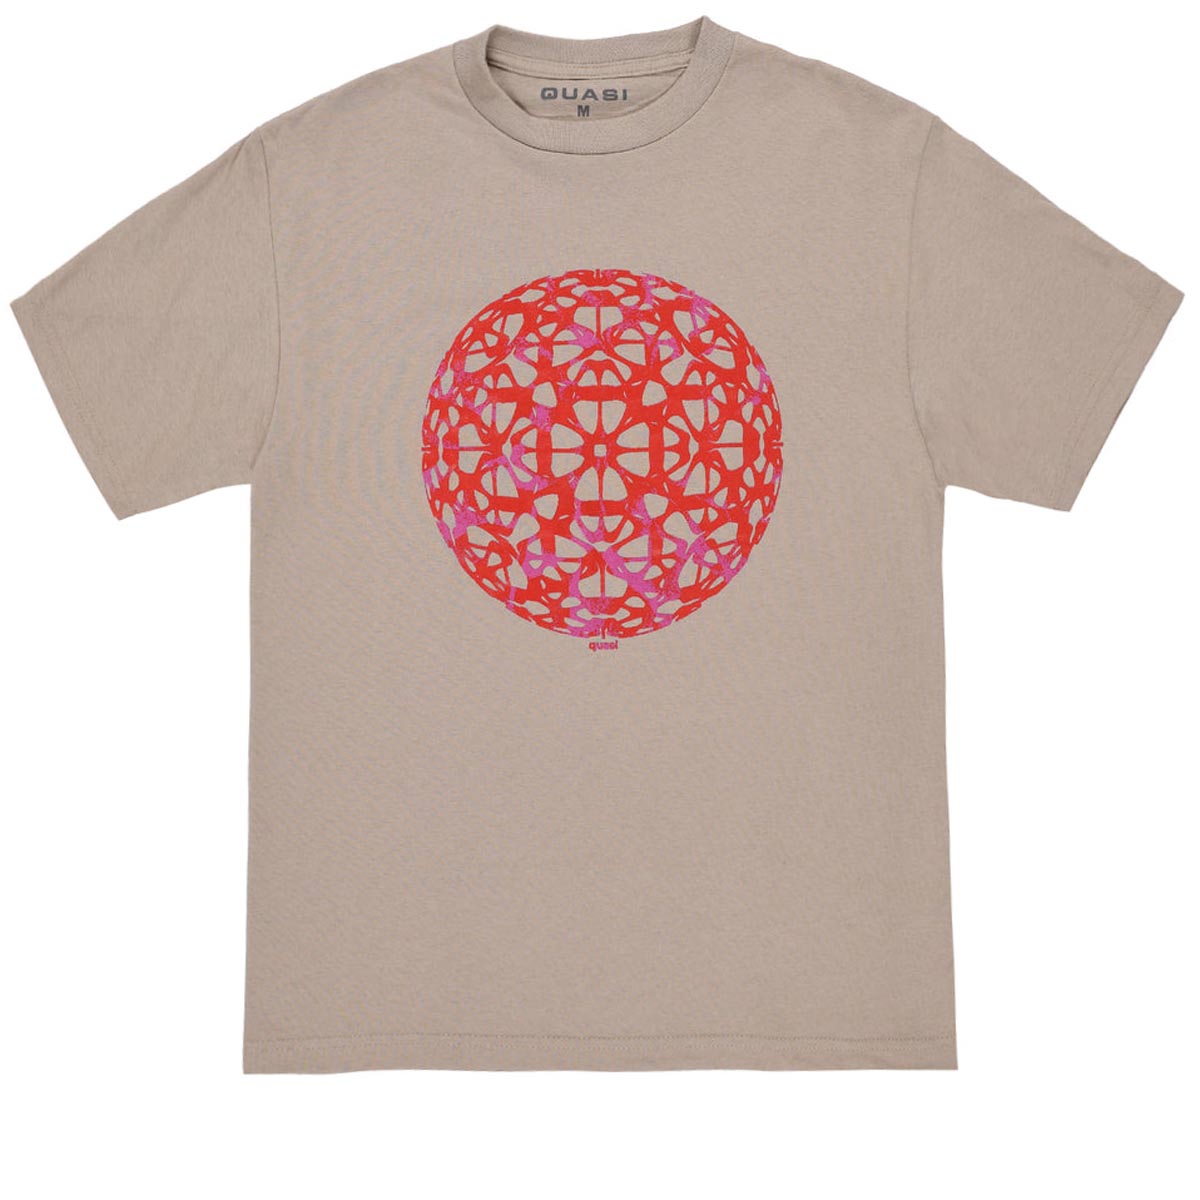 Quasi Globe T-Shirt - Sand image 1